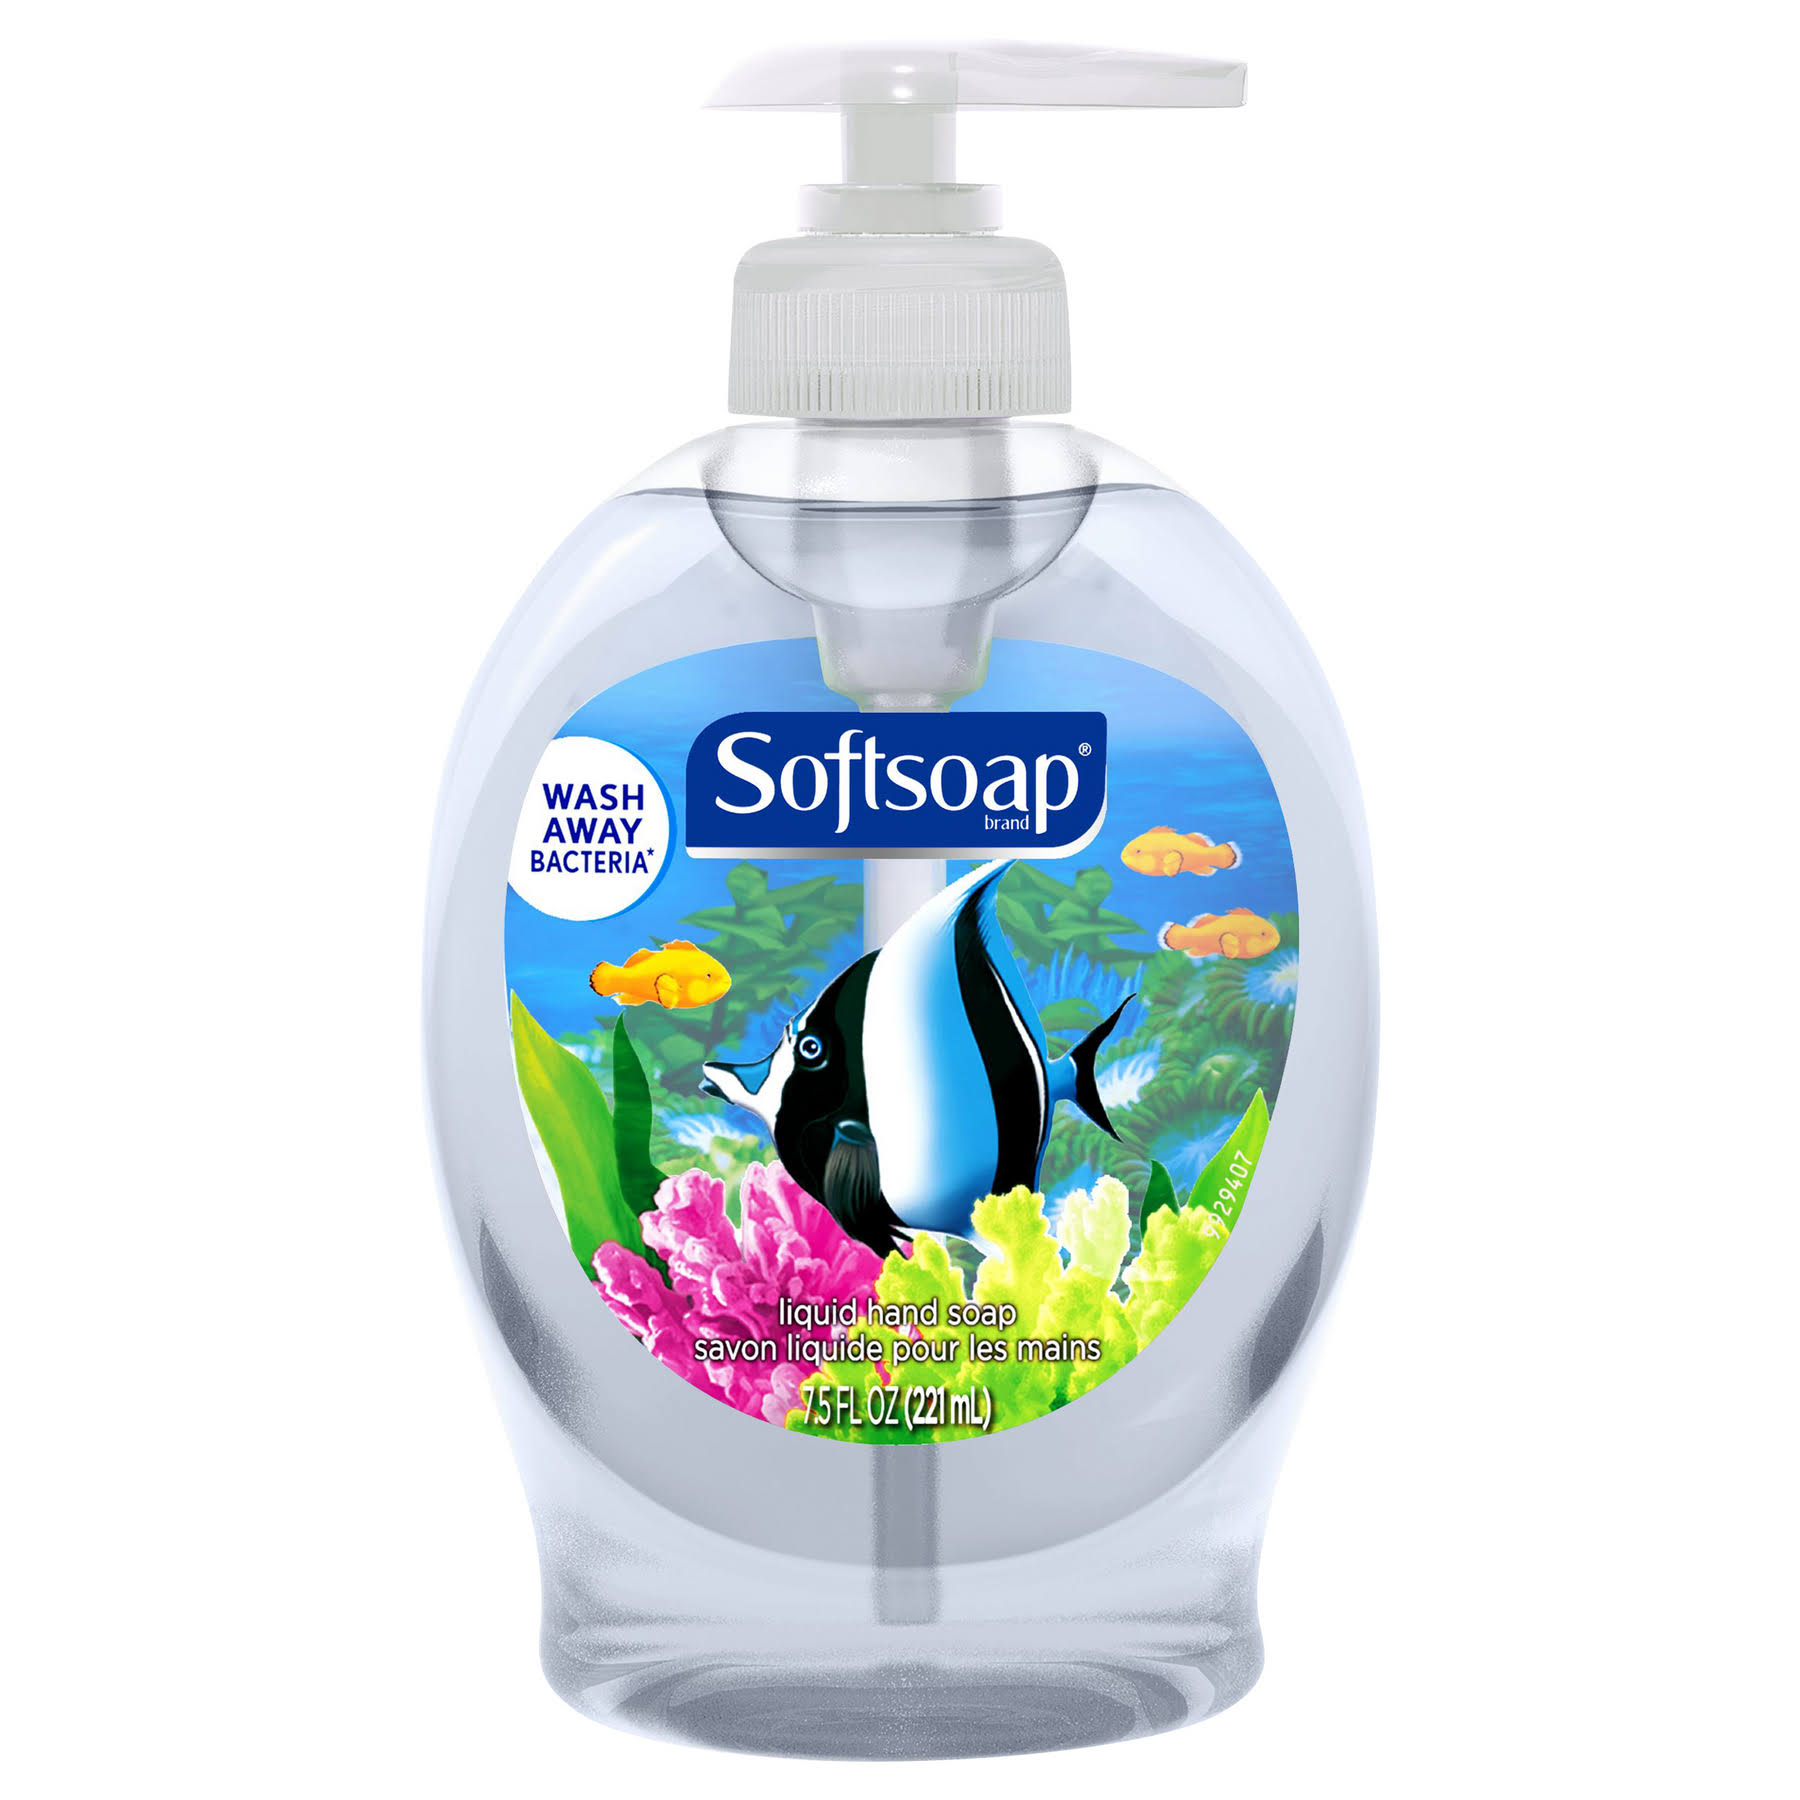 Softsoap Liquid Hand Soap - 7.5oz